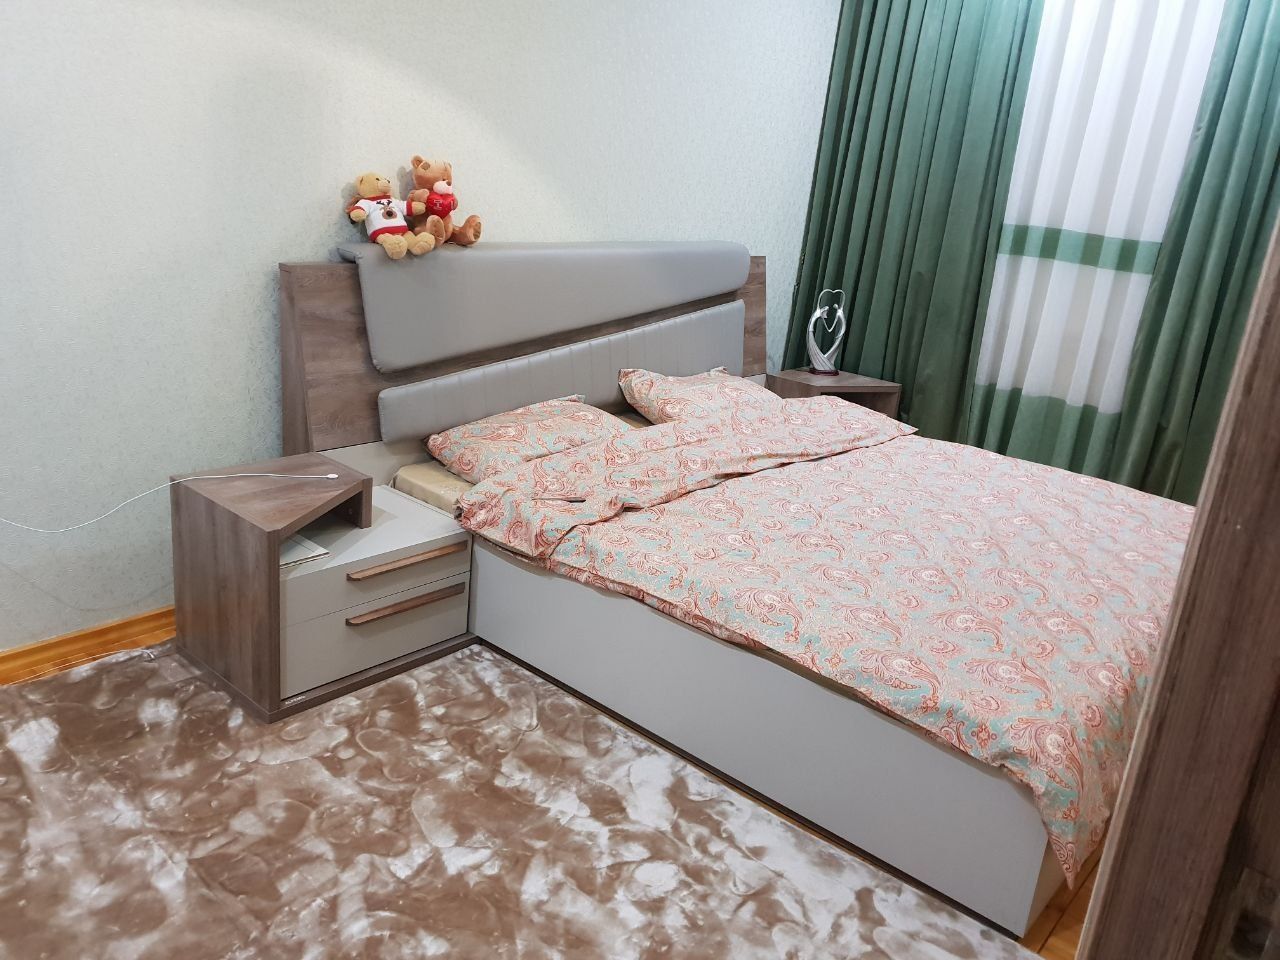 Мебель спальня,производство Турция